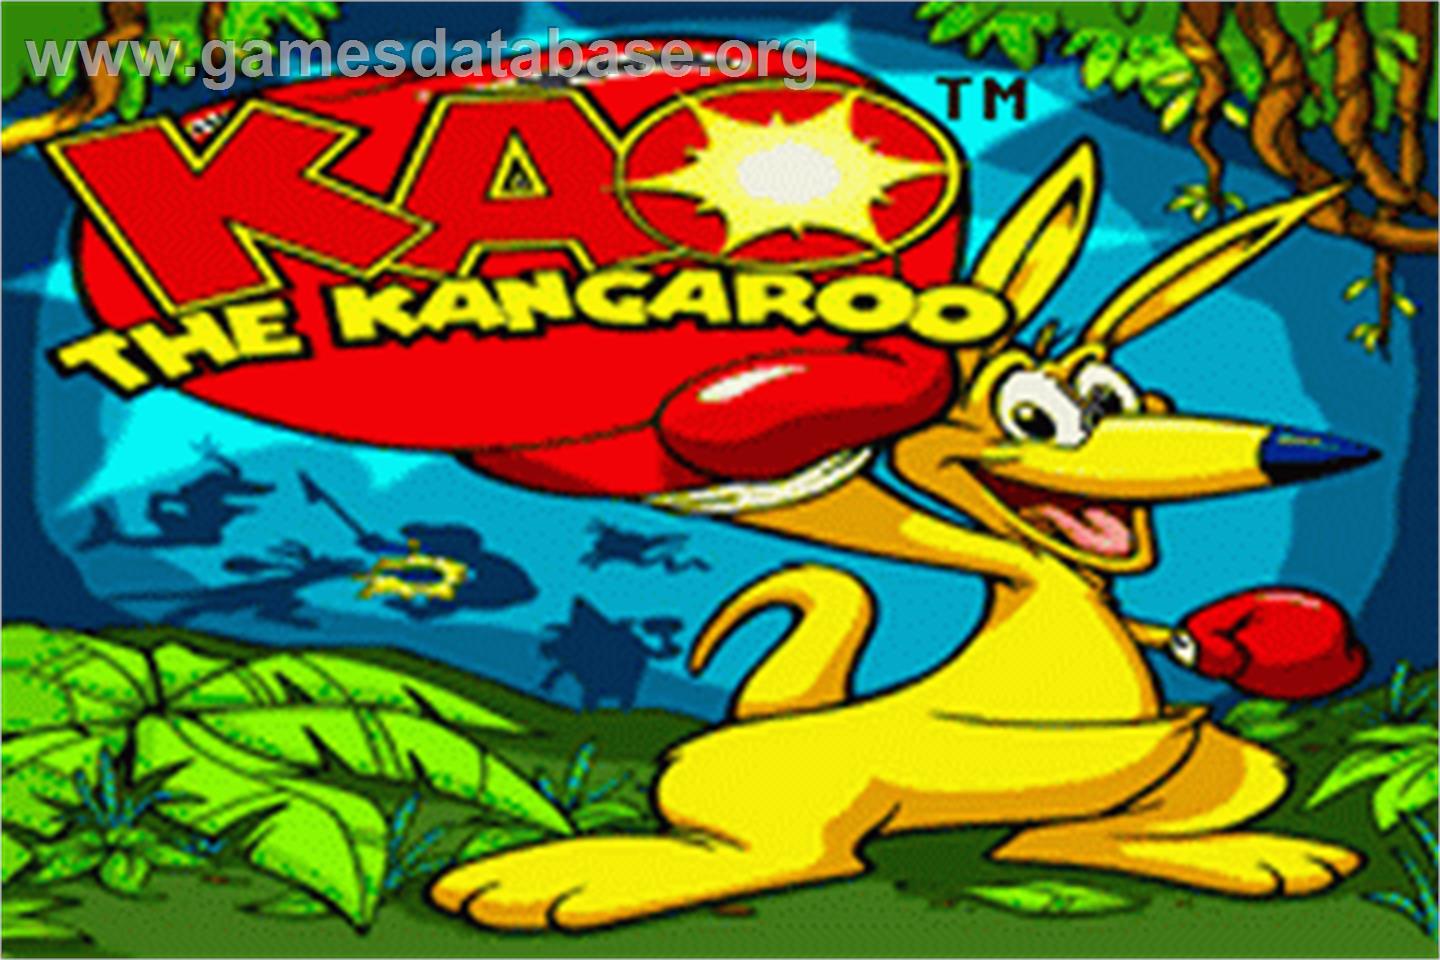 Kao the Kangaroo - Nintendo Game Boy Advance - Artwork - Title Screen